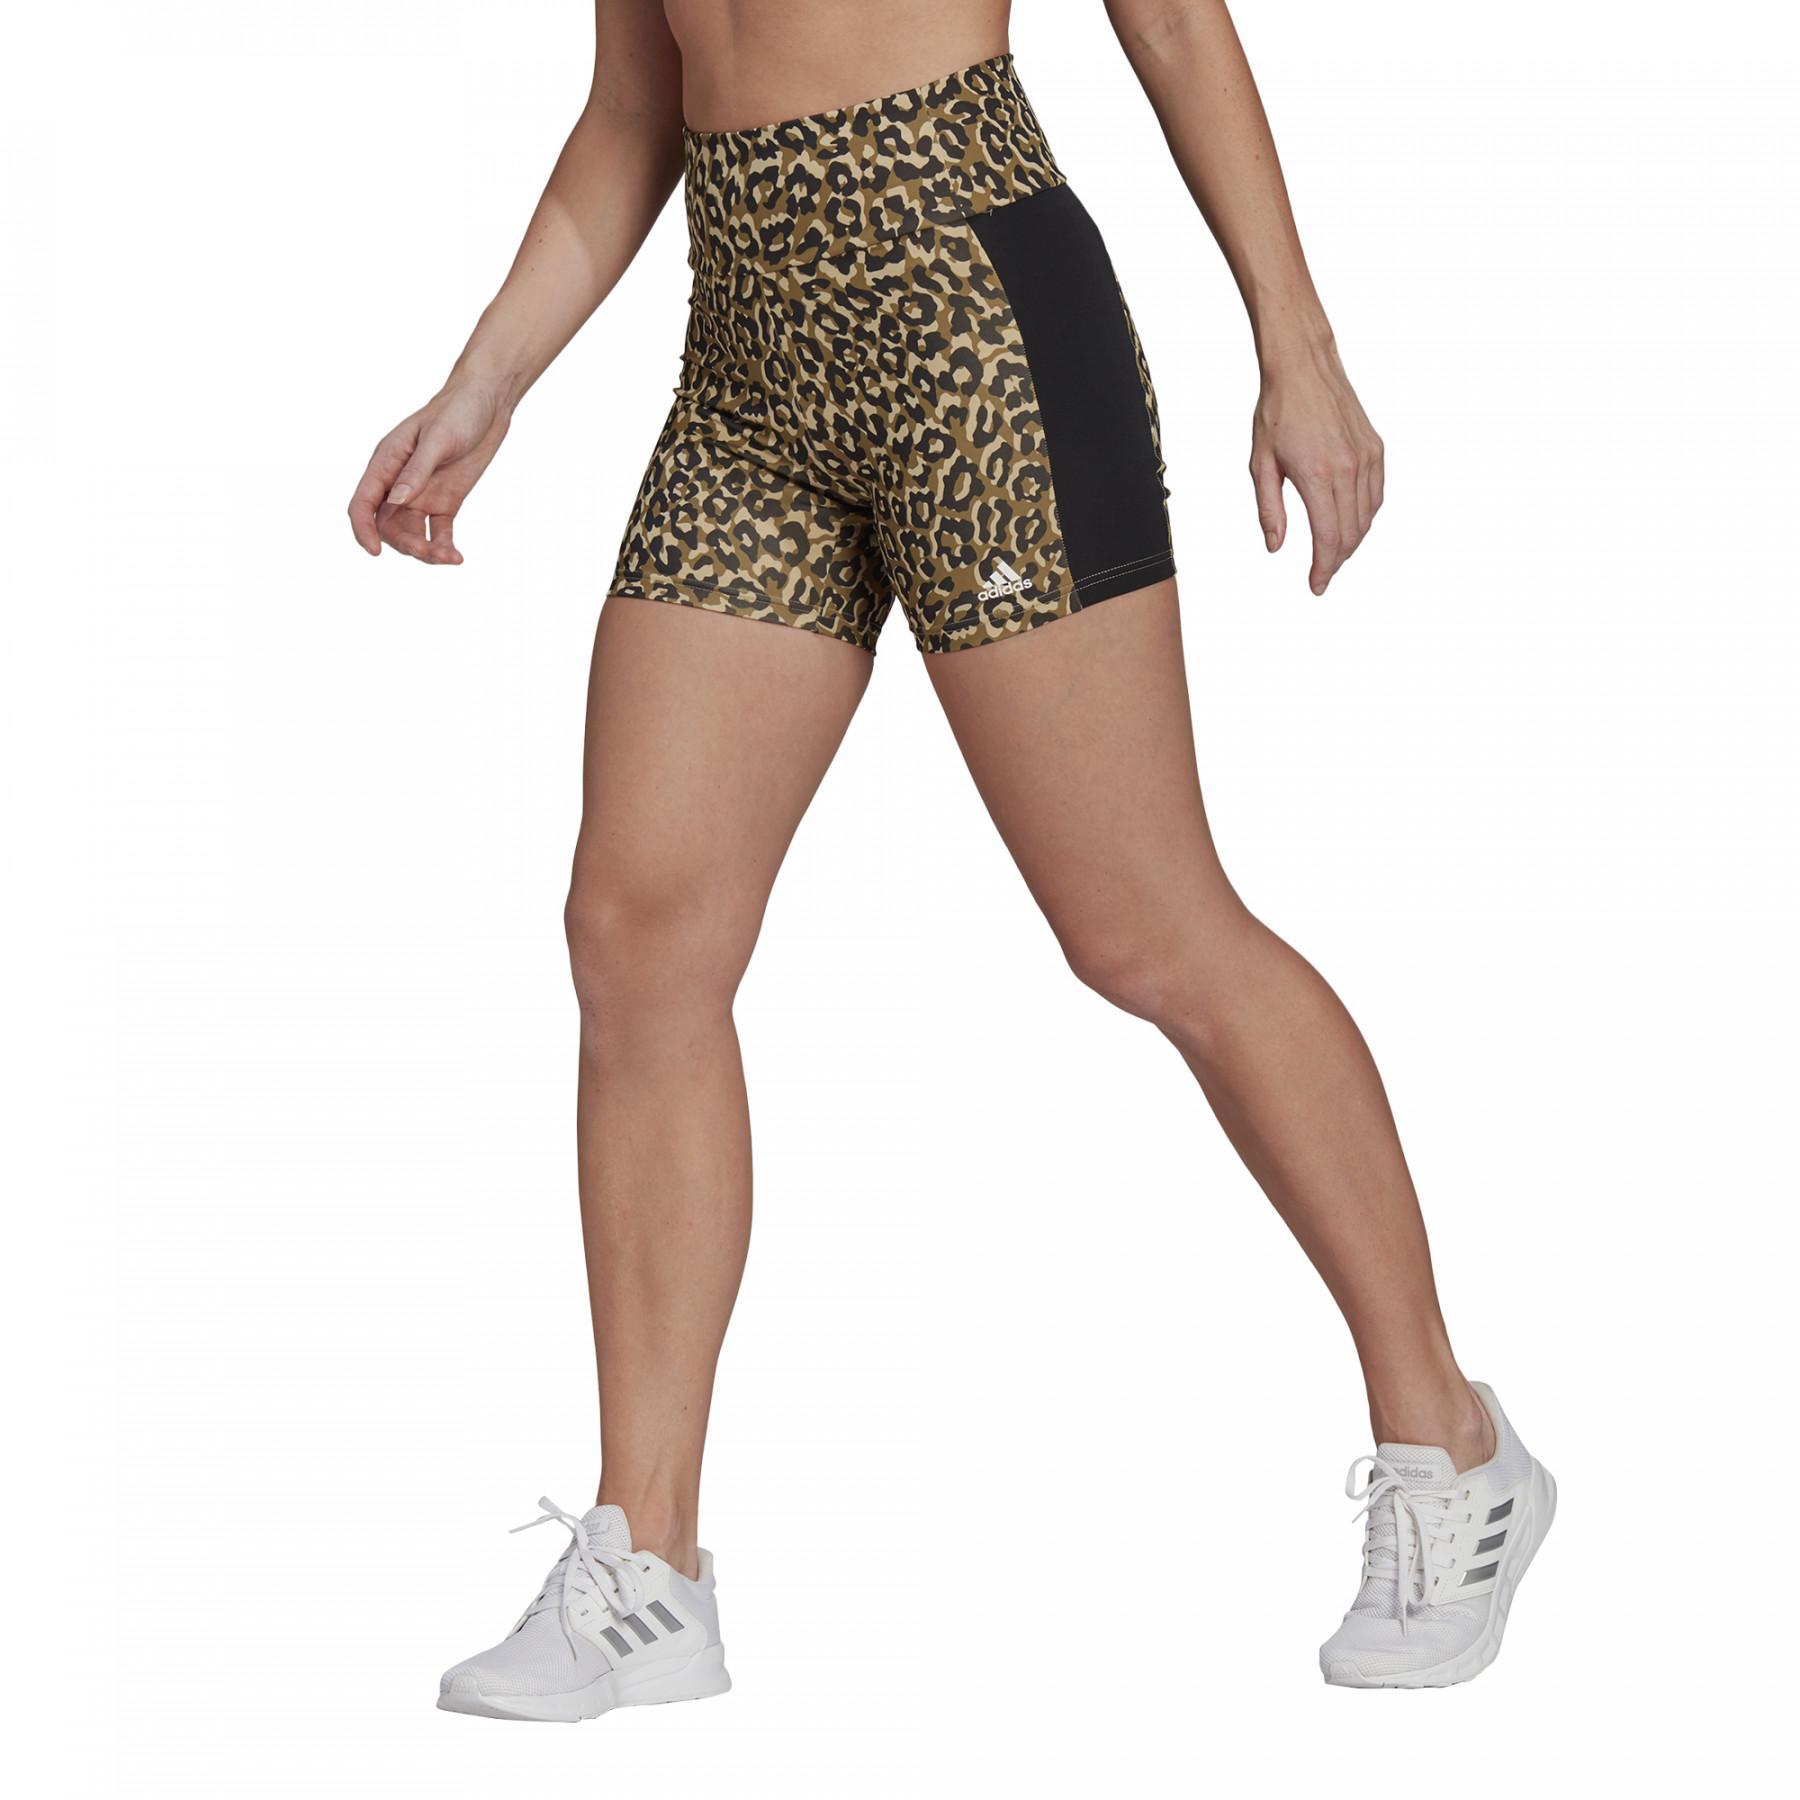 Vrouwelijke fietser adidas Designed To Move Aeoready Leopard Imprimé